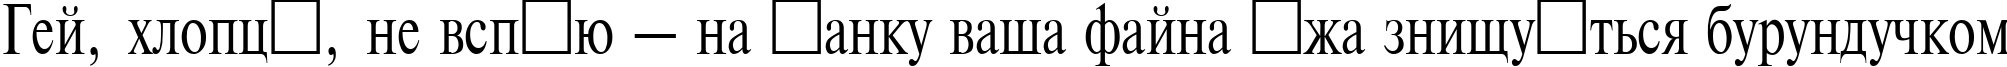 Пример написания шрифтом TimesET75n текста на украинском